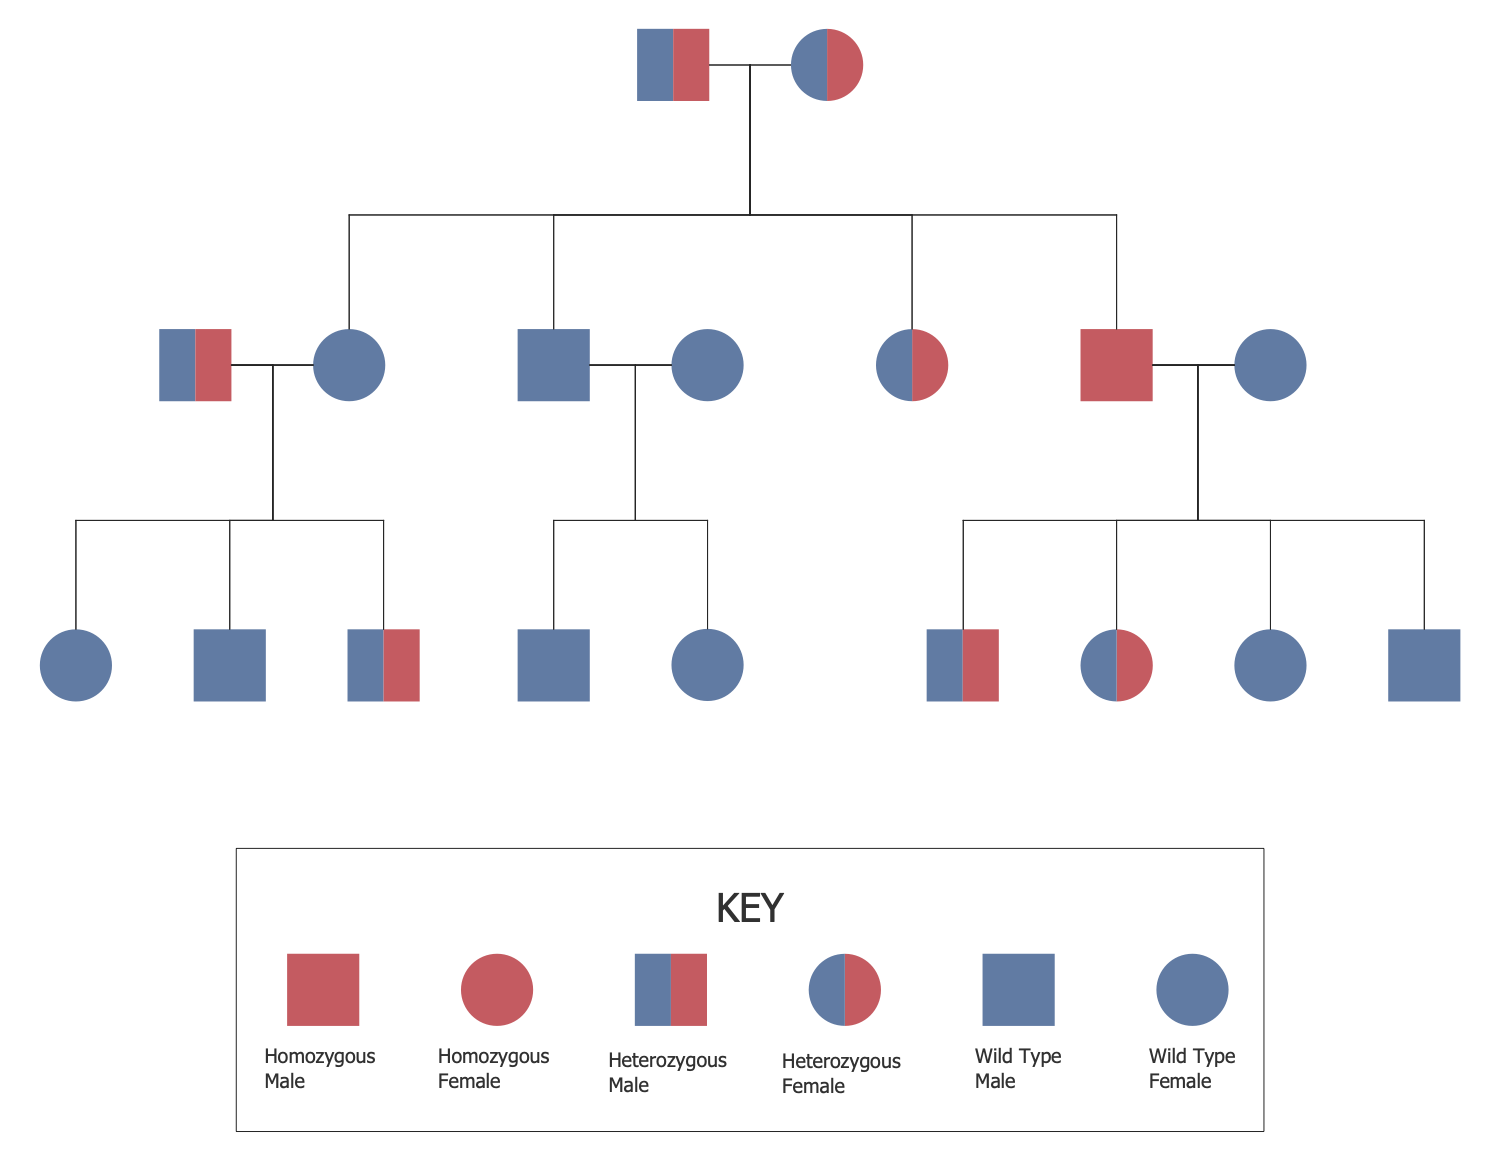 pedigree-charts-with-genotypes